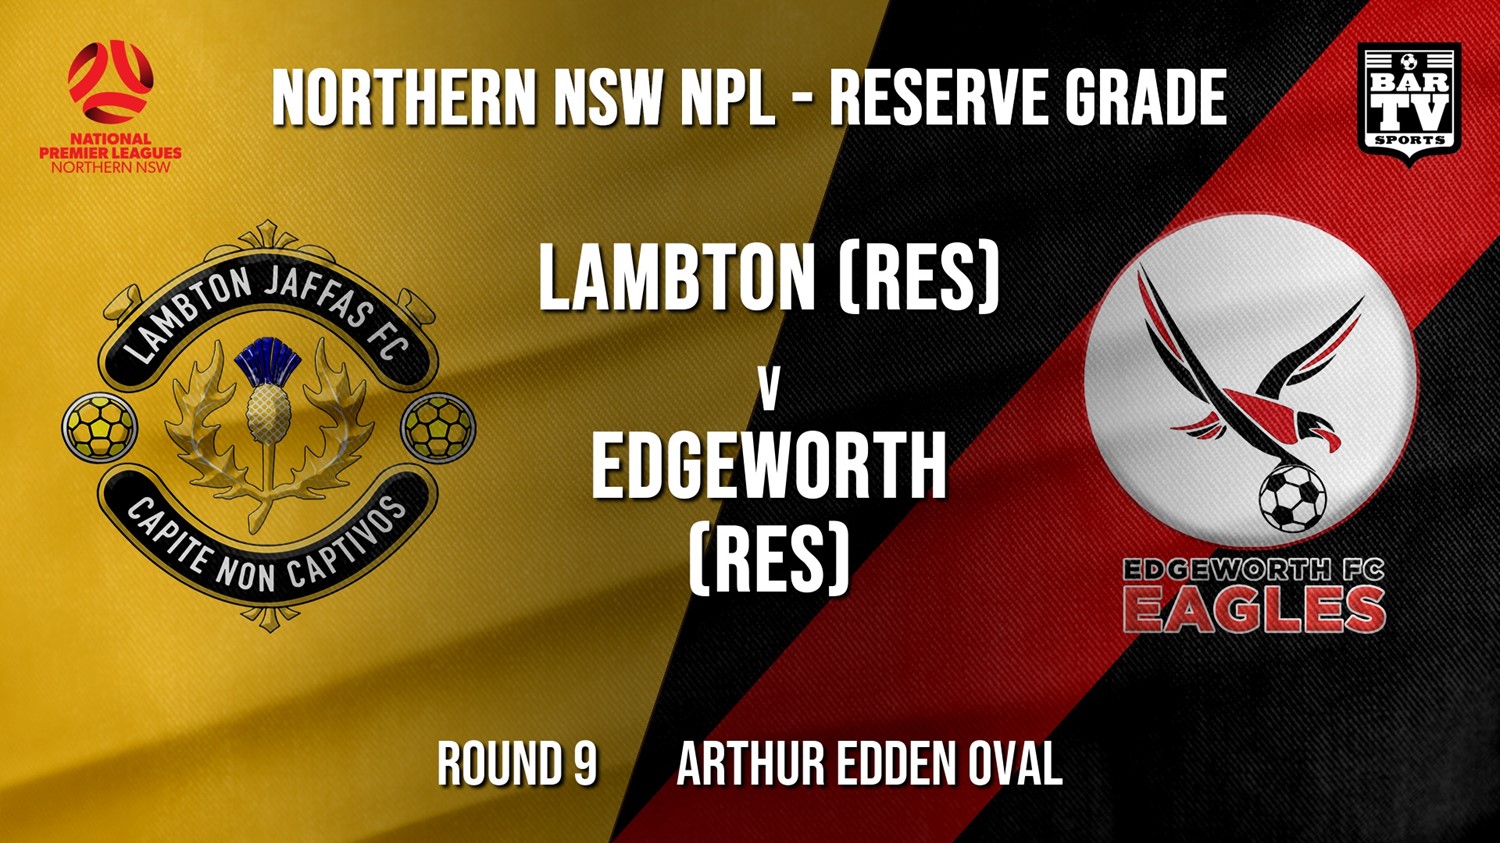 NPL NNSW RES Round 9 - Lambton Jaffas FC (Res) v Edgeworth Eagles (Res) Minigame Slate Image